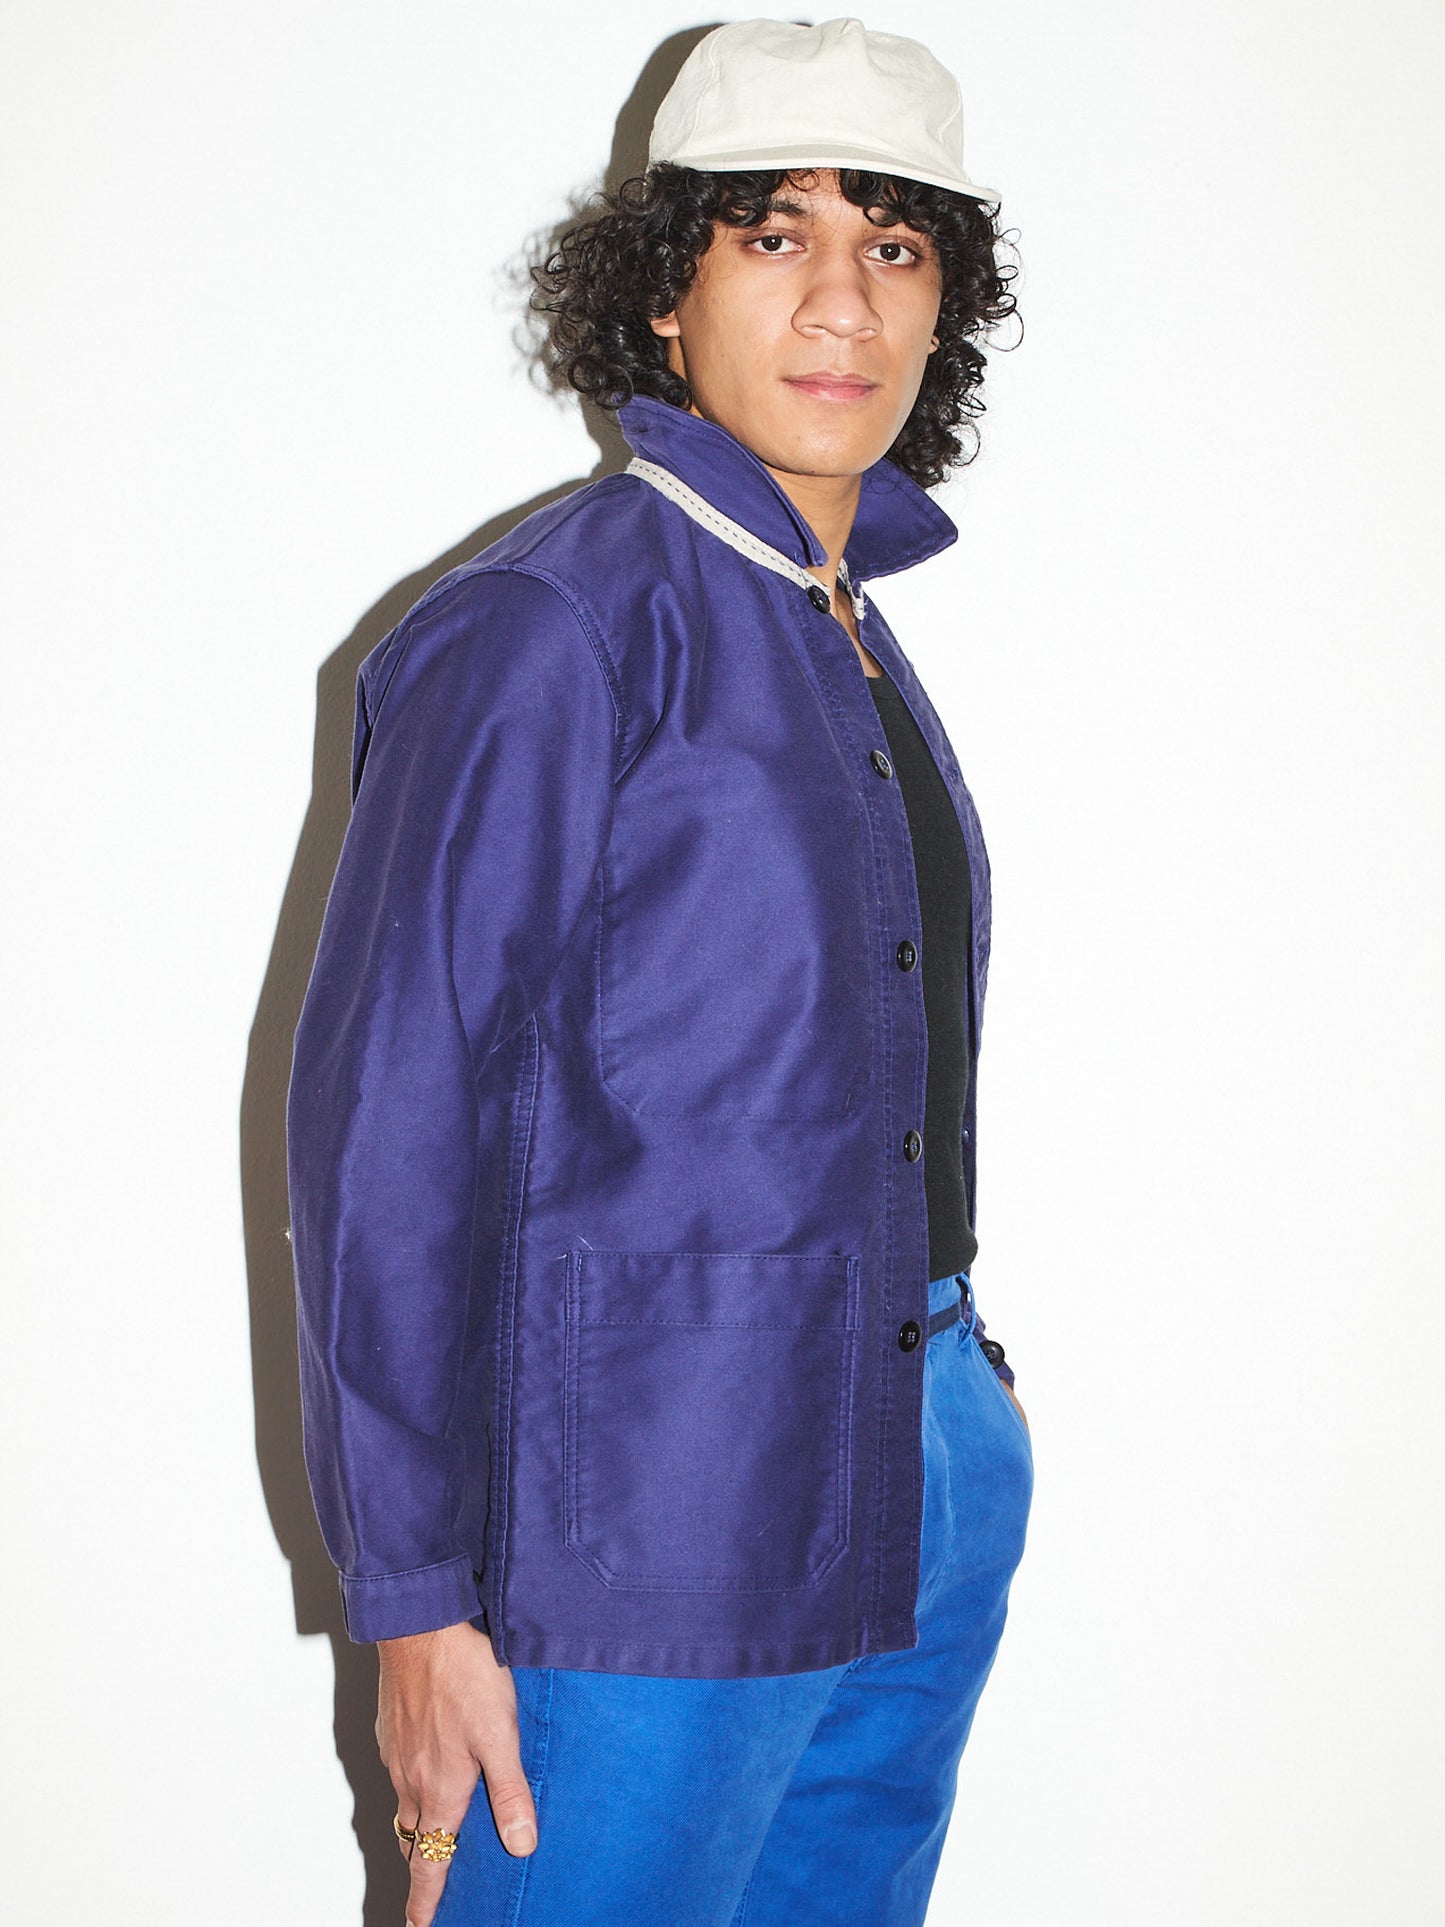 Veste de Charpentier Marine (Moleskin workwear jacket)